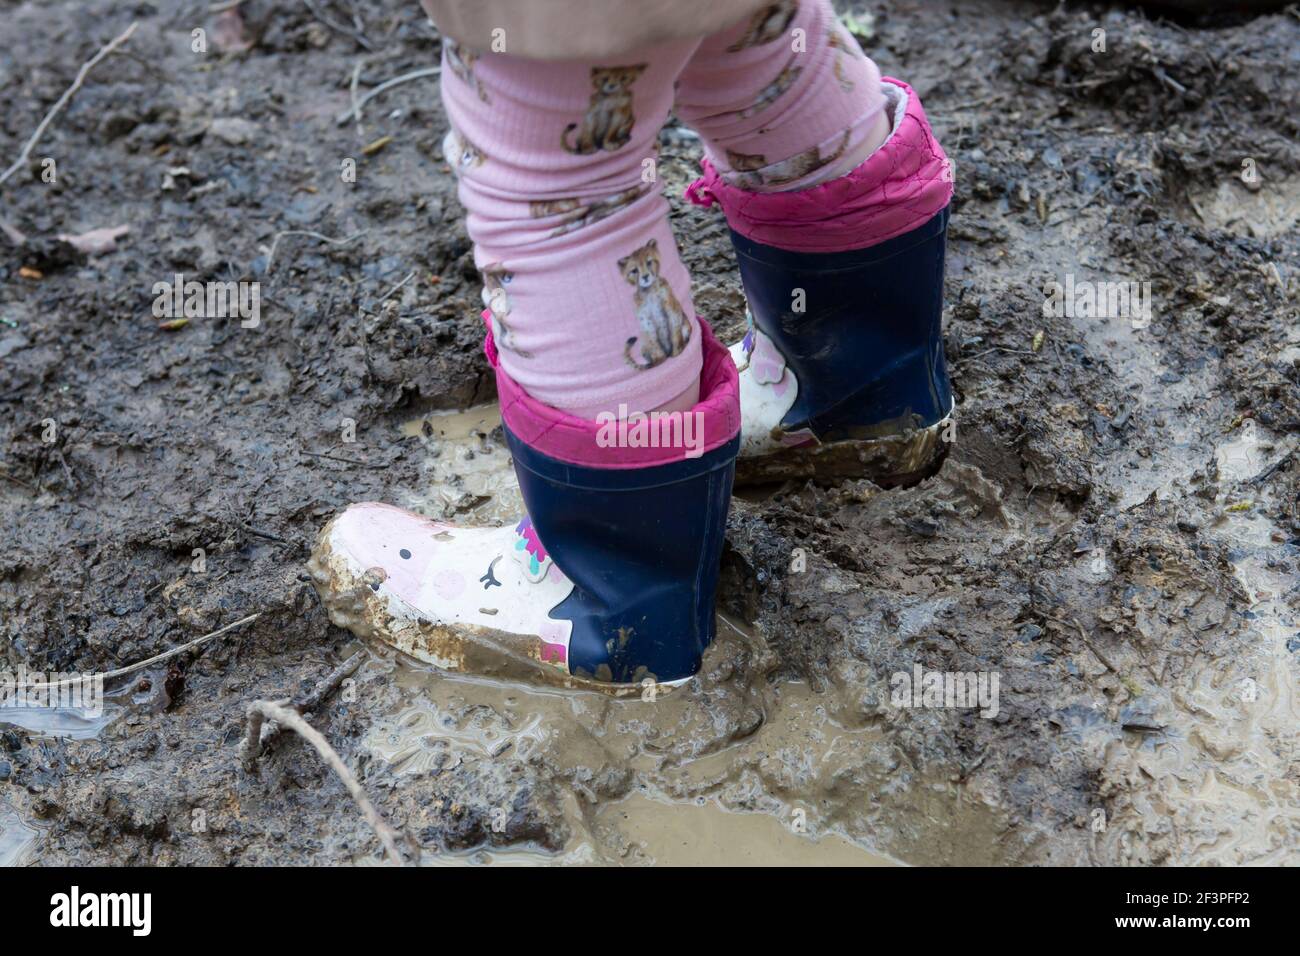 Splashing in mud with wellies on Stock Photo